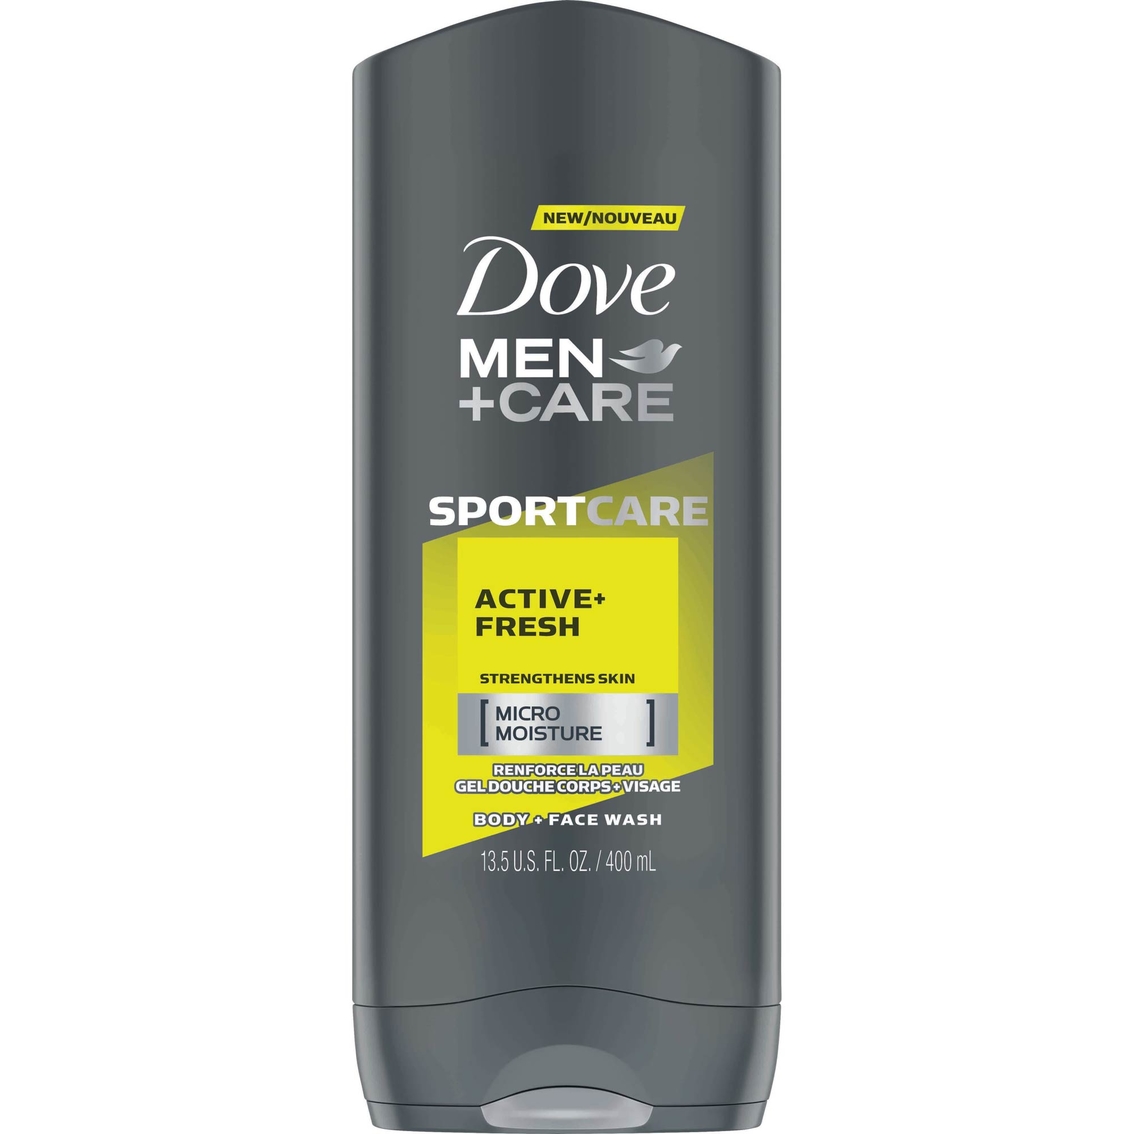 Dove Men Plus Care Sportcare Active And Fresh Body 13.5 Oz | Body & Care | Beauty & | Shop The Exchange